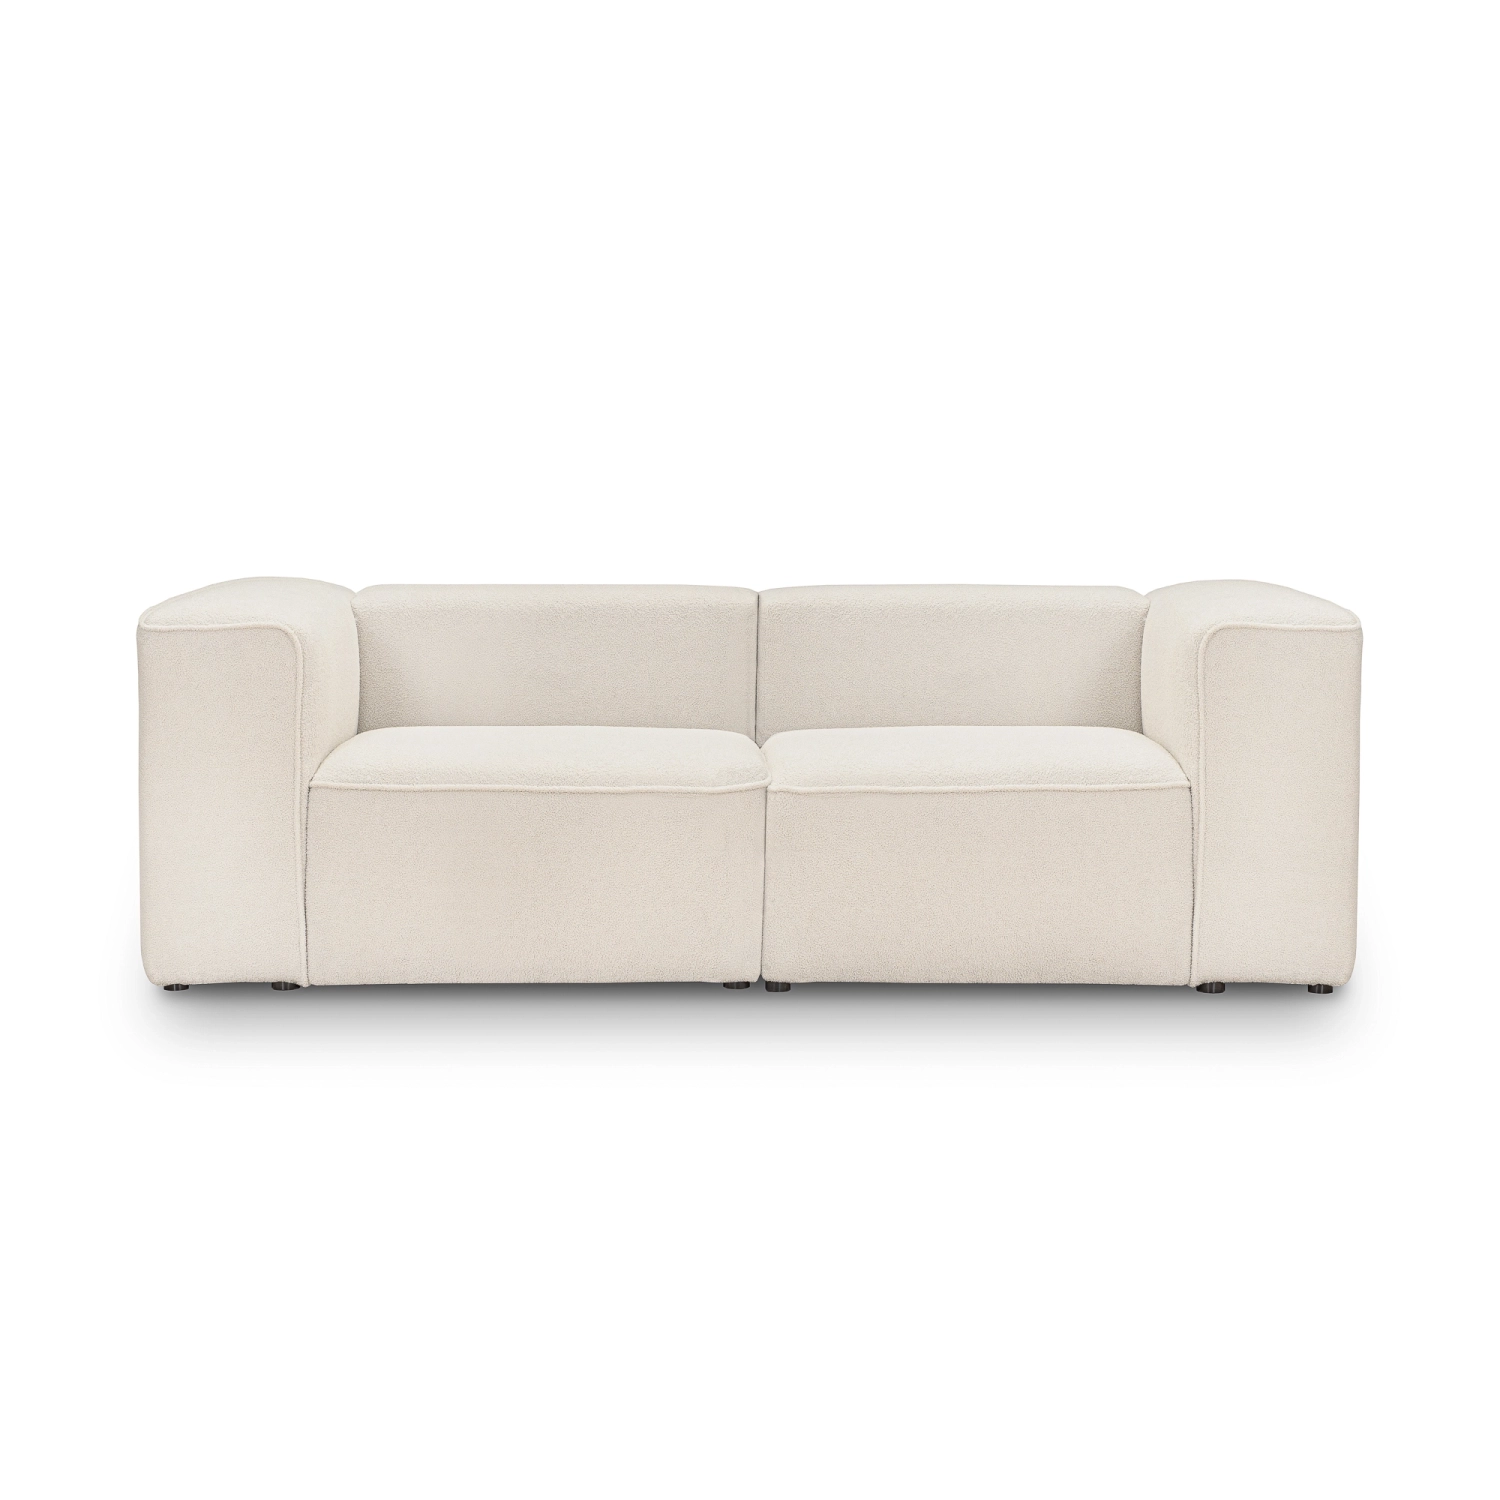 Luss sofa modułowa 2 osobowa 220x100 cm, tkanina boucle